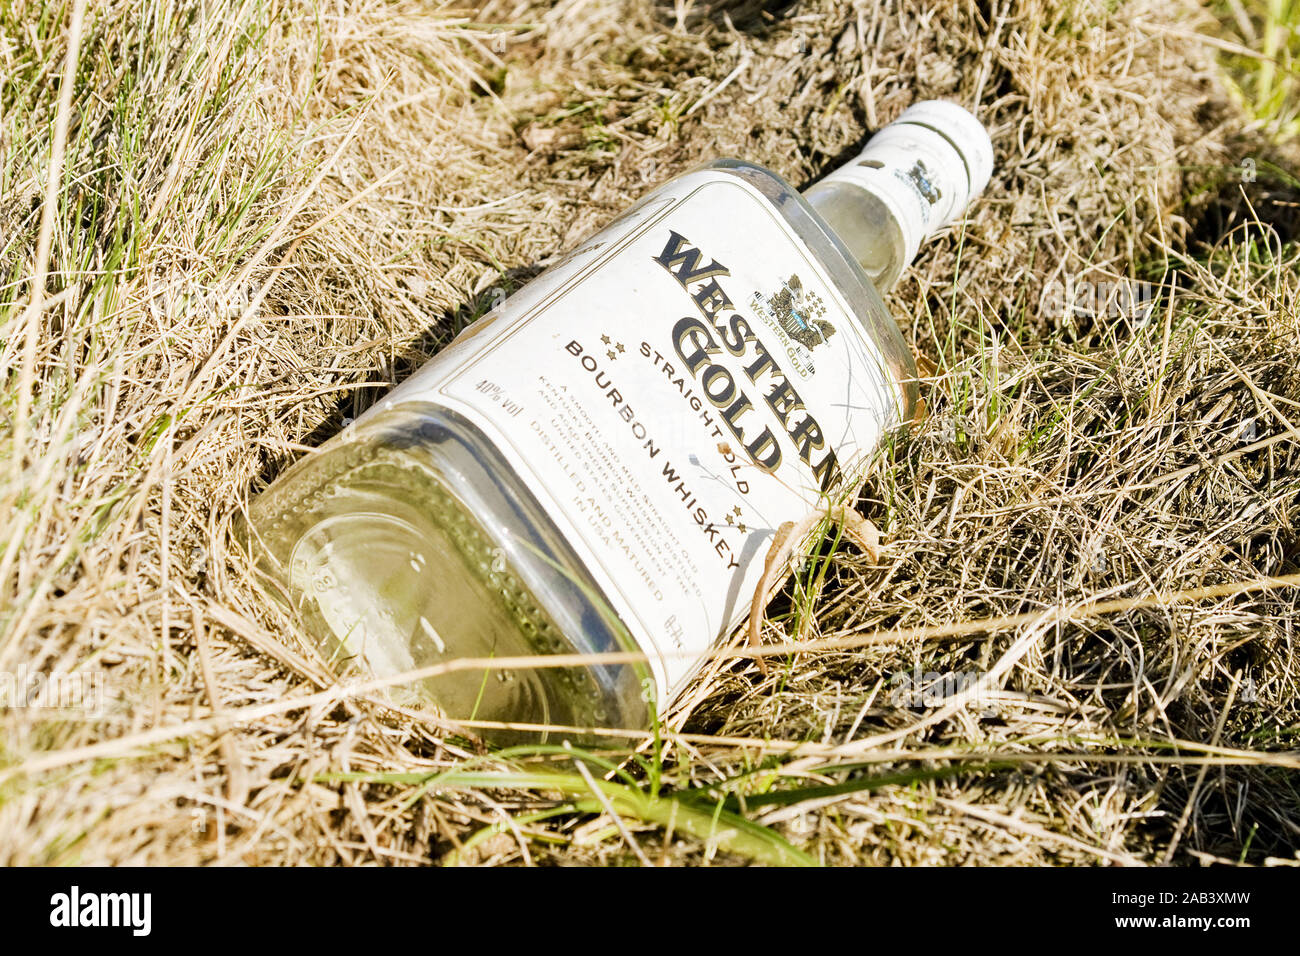 Leere Flasche Whiskey am Strassenrand |Empty bottle of whiskey on the roadside| Stock Photo